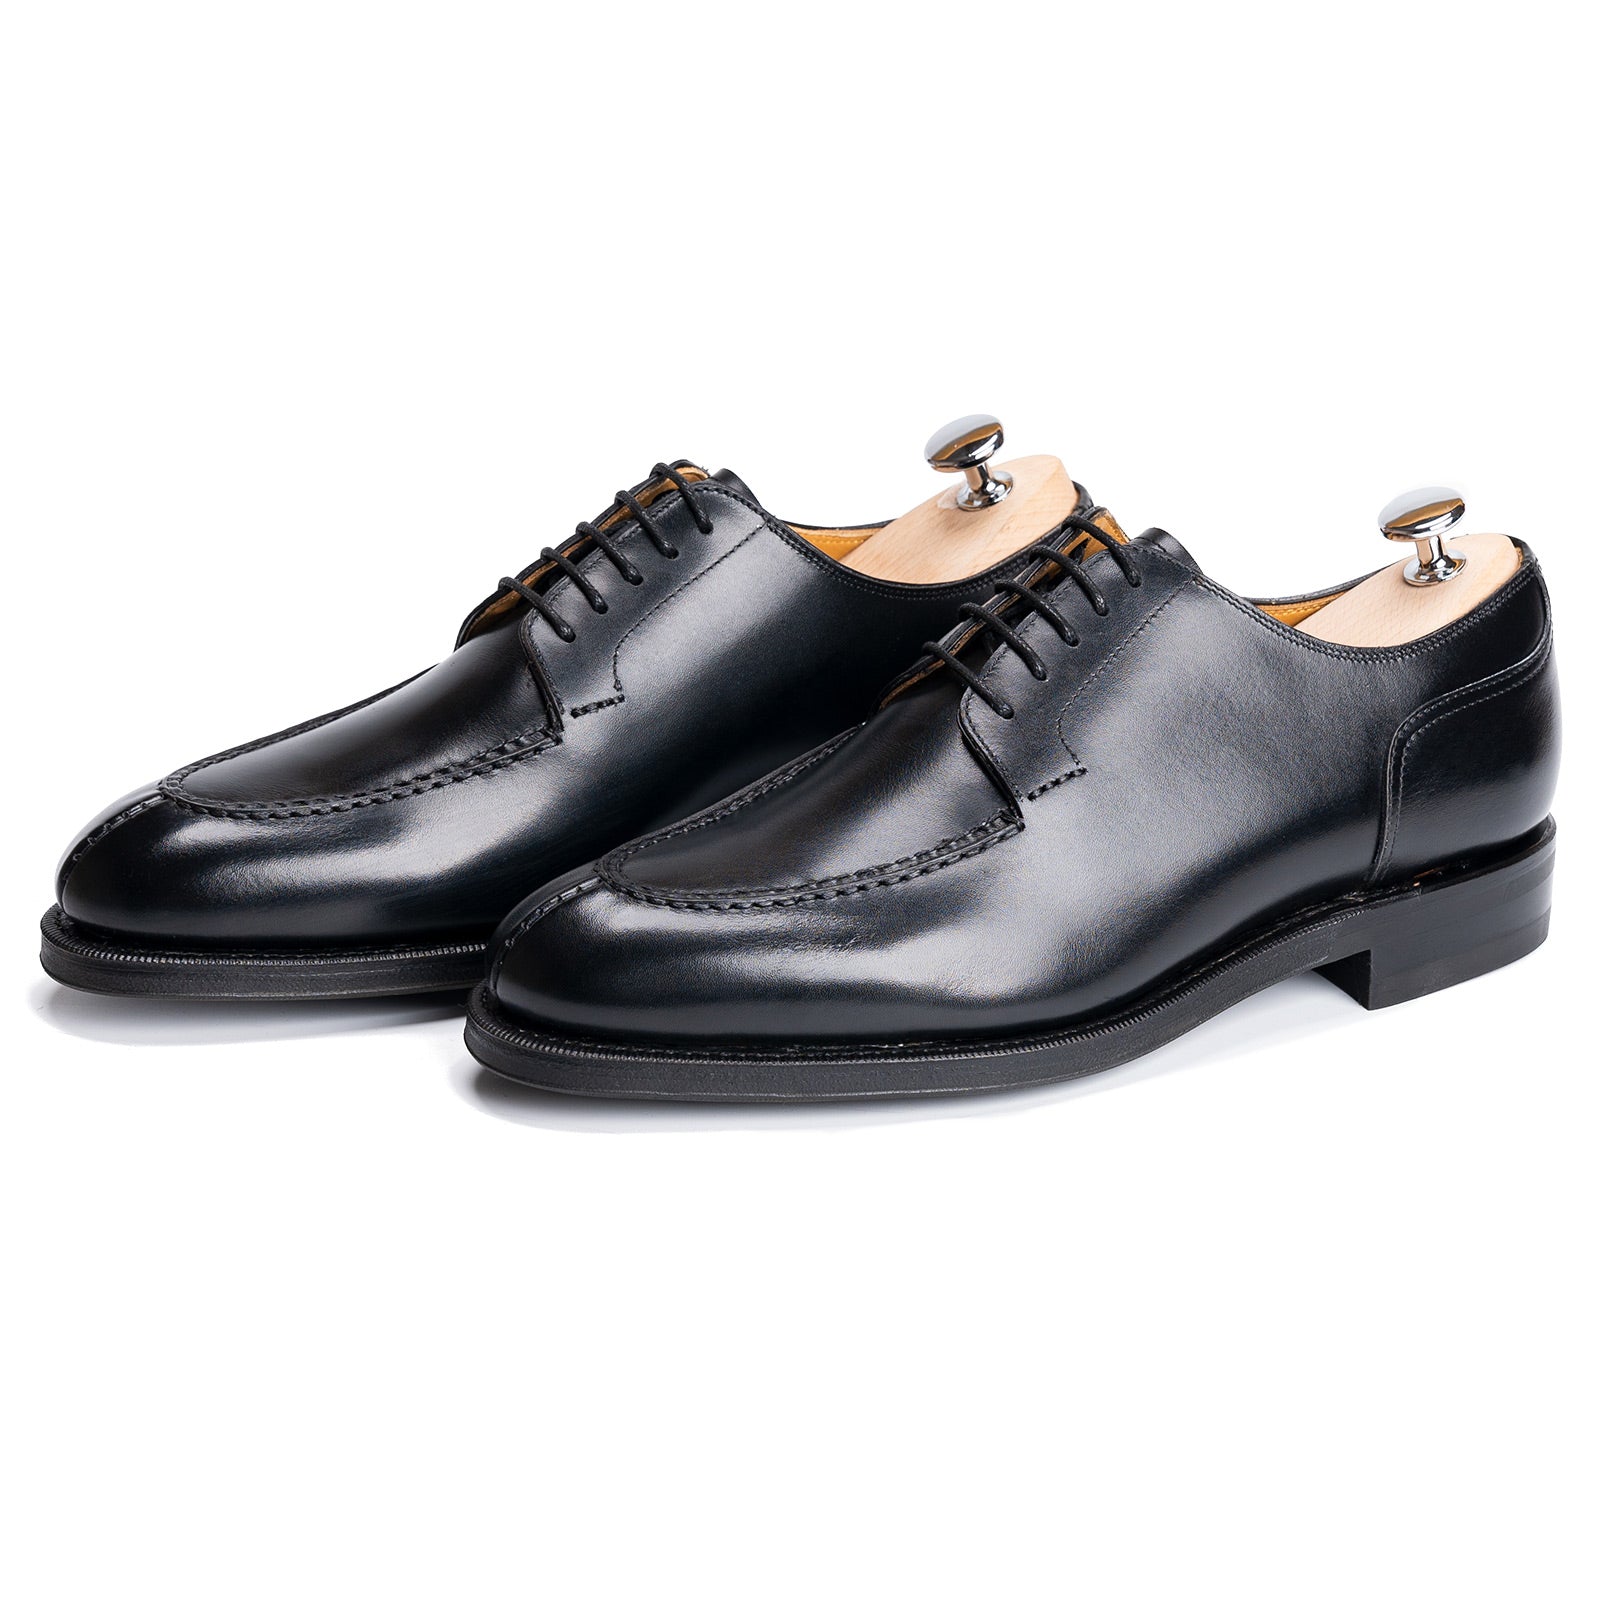 101596 - BLACK CALF - E – Meermin Shoes